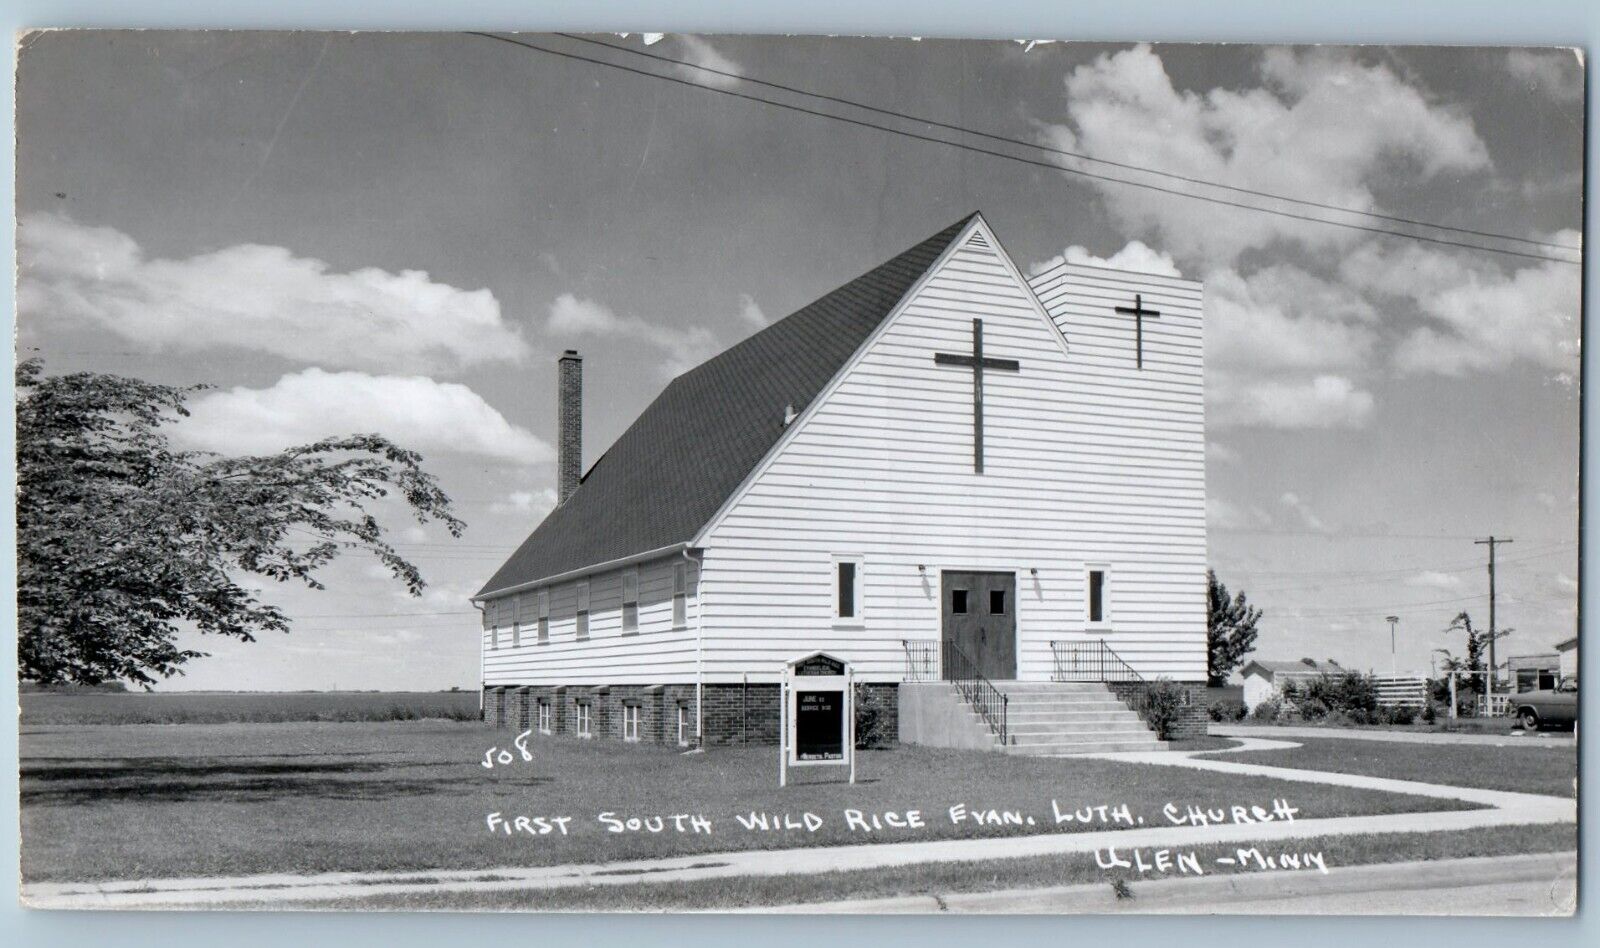 Ulen Minnesota MN Postcard RPPC Photo First South Wild Rice Evan. Luth. Church